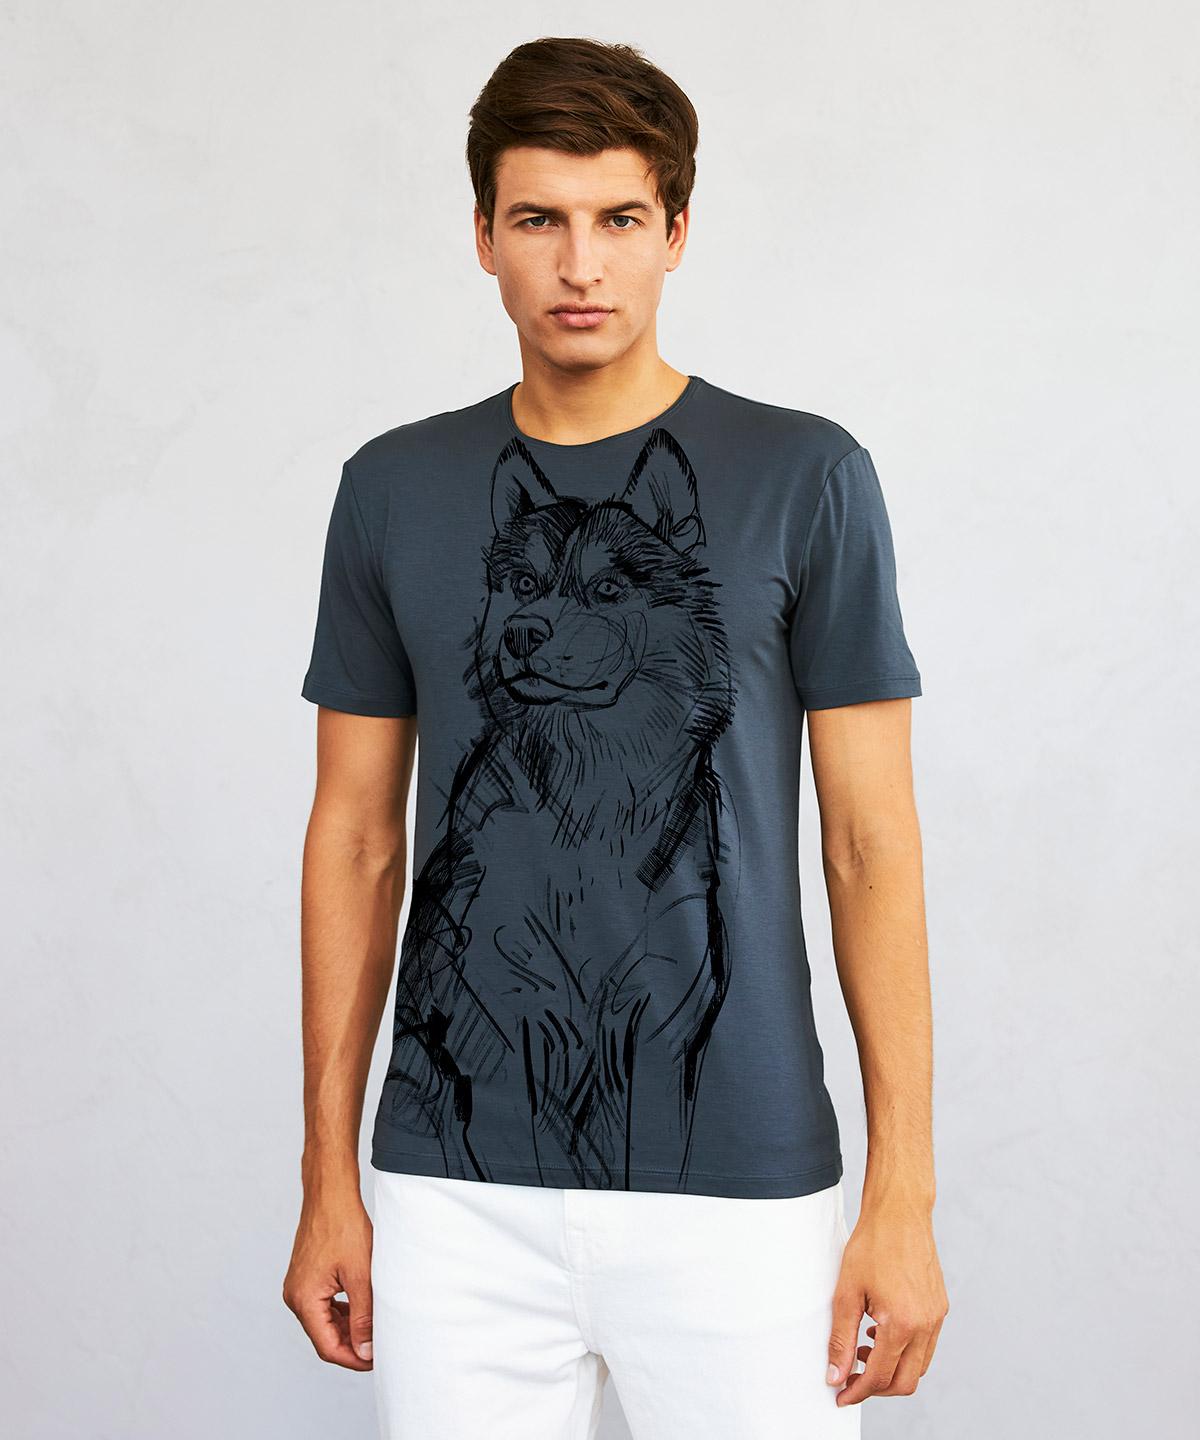 Siberian Husky dark cool gray t-shirt MAN